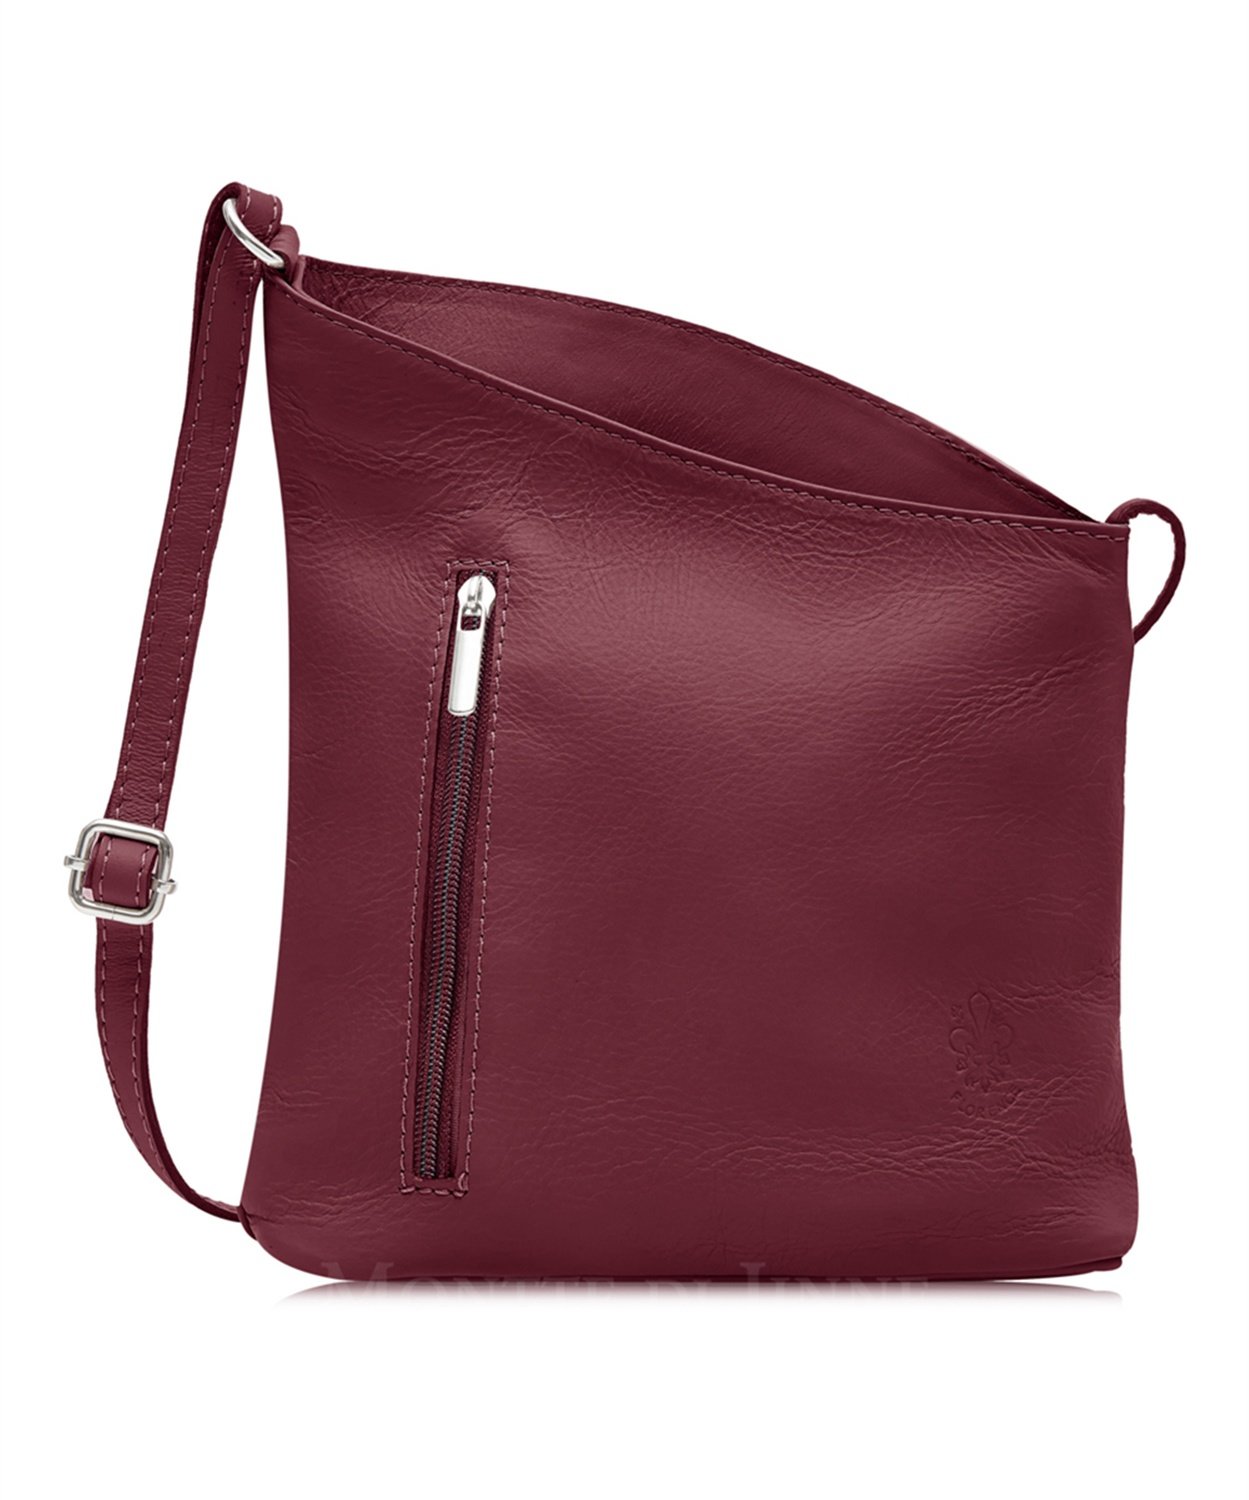 Berry Red Soft Leather Angled Shoulder Bag 